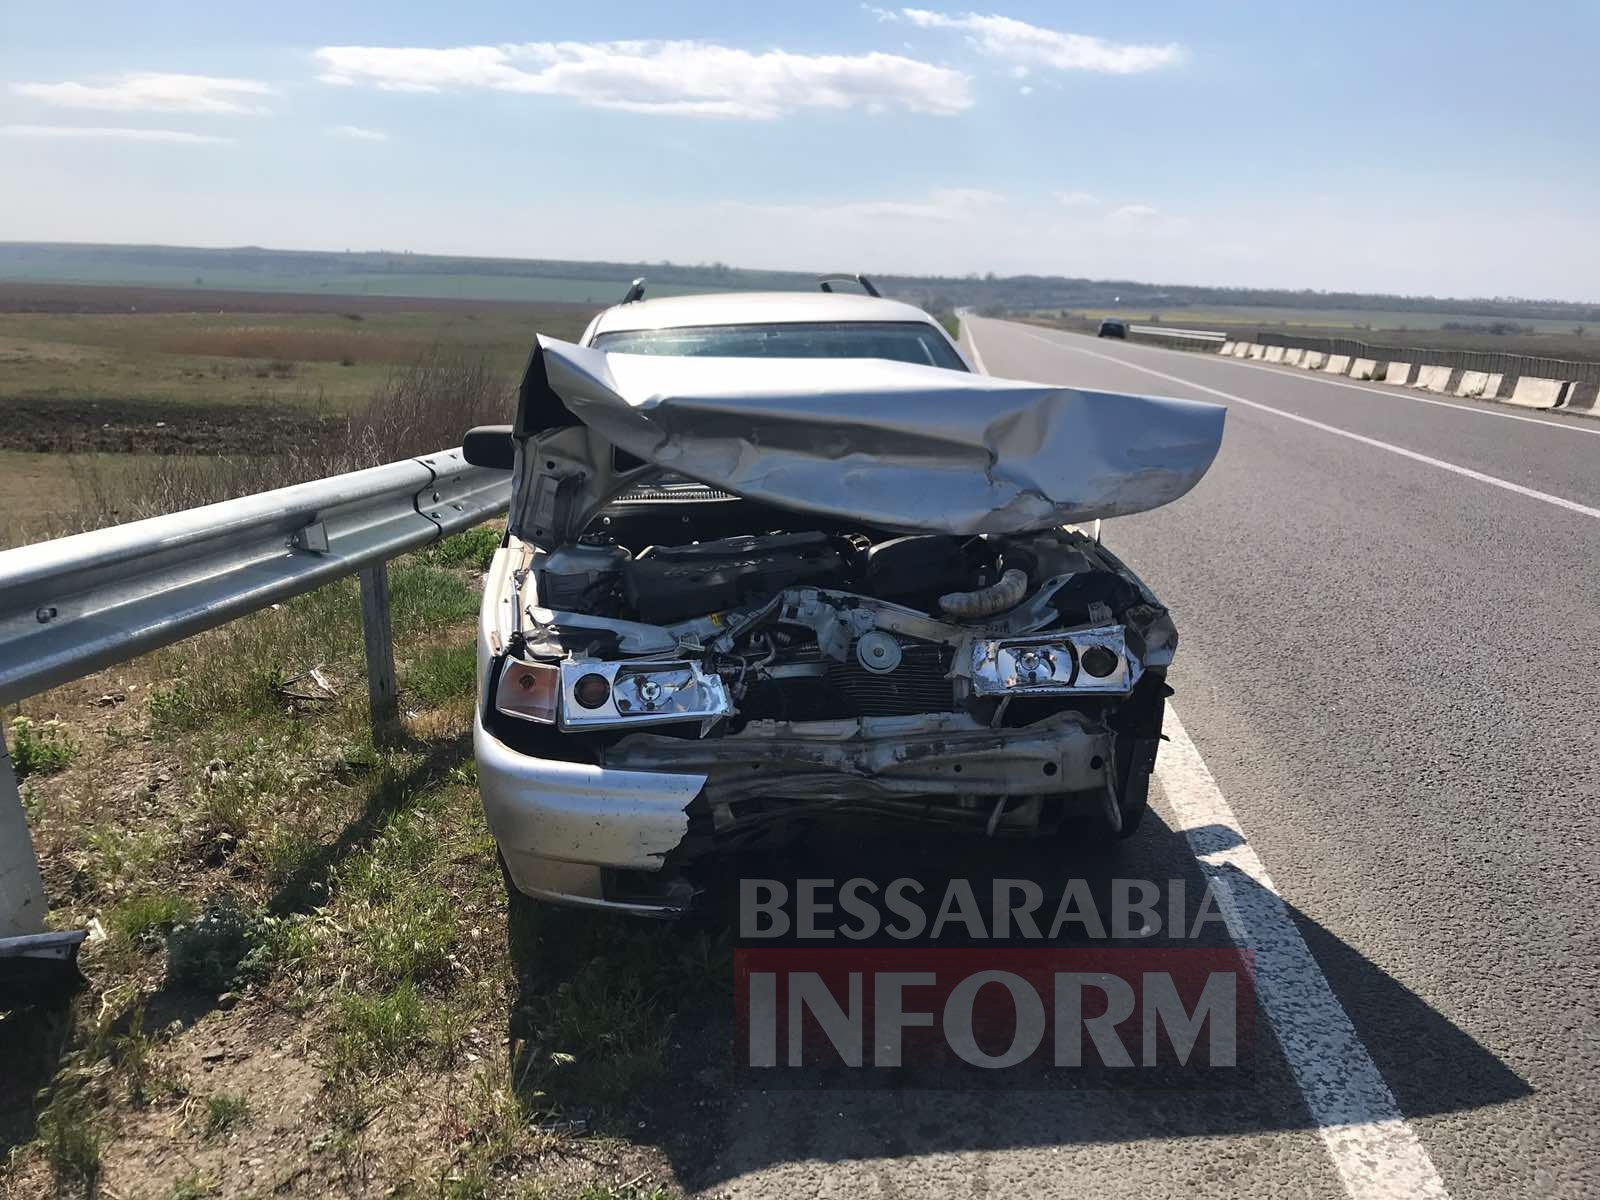 На аварийно-опасном повороте на трассе Одесса-Рени произошло очередное ДТП